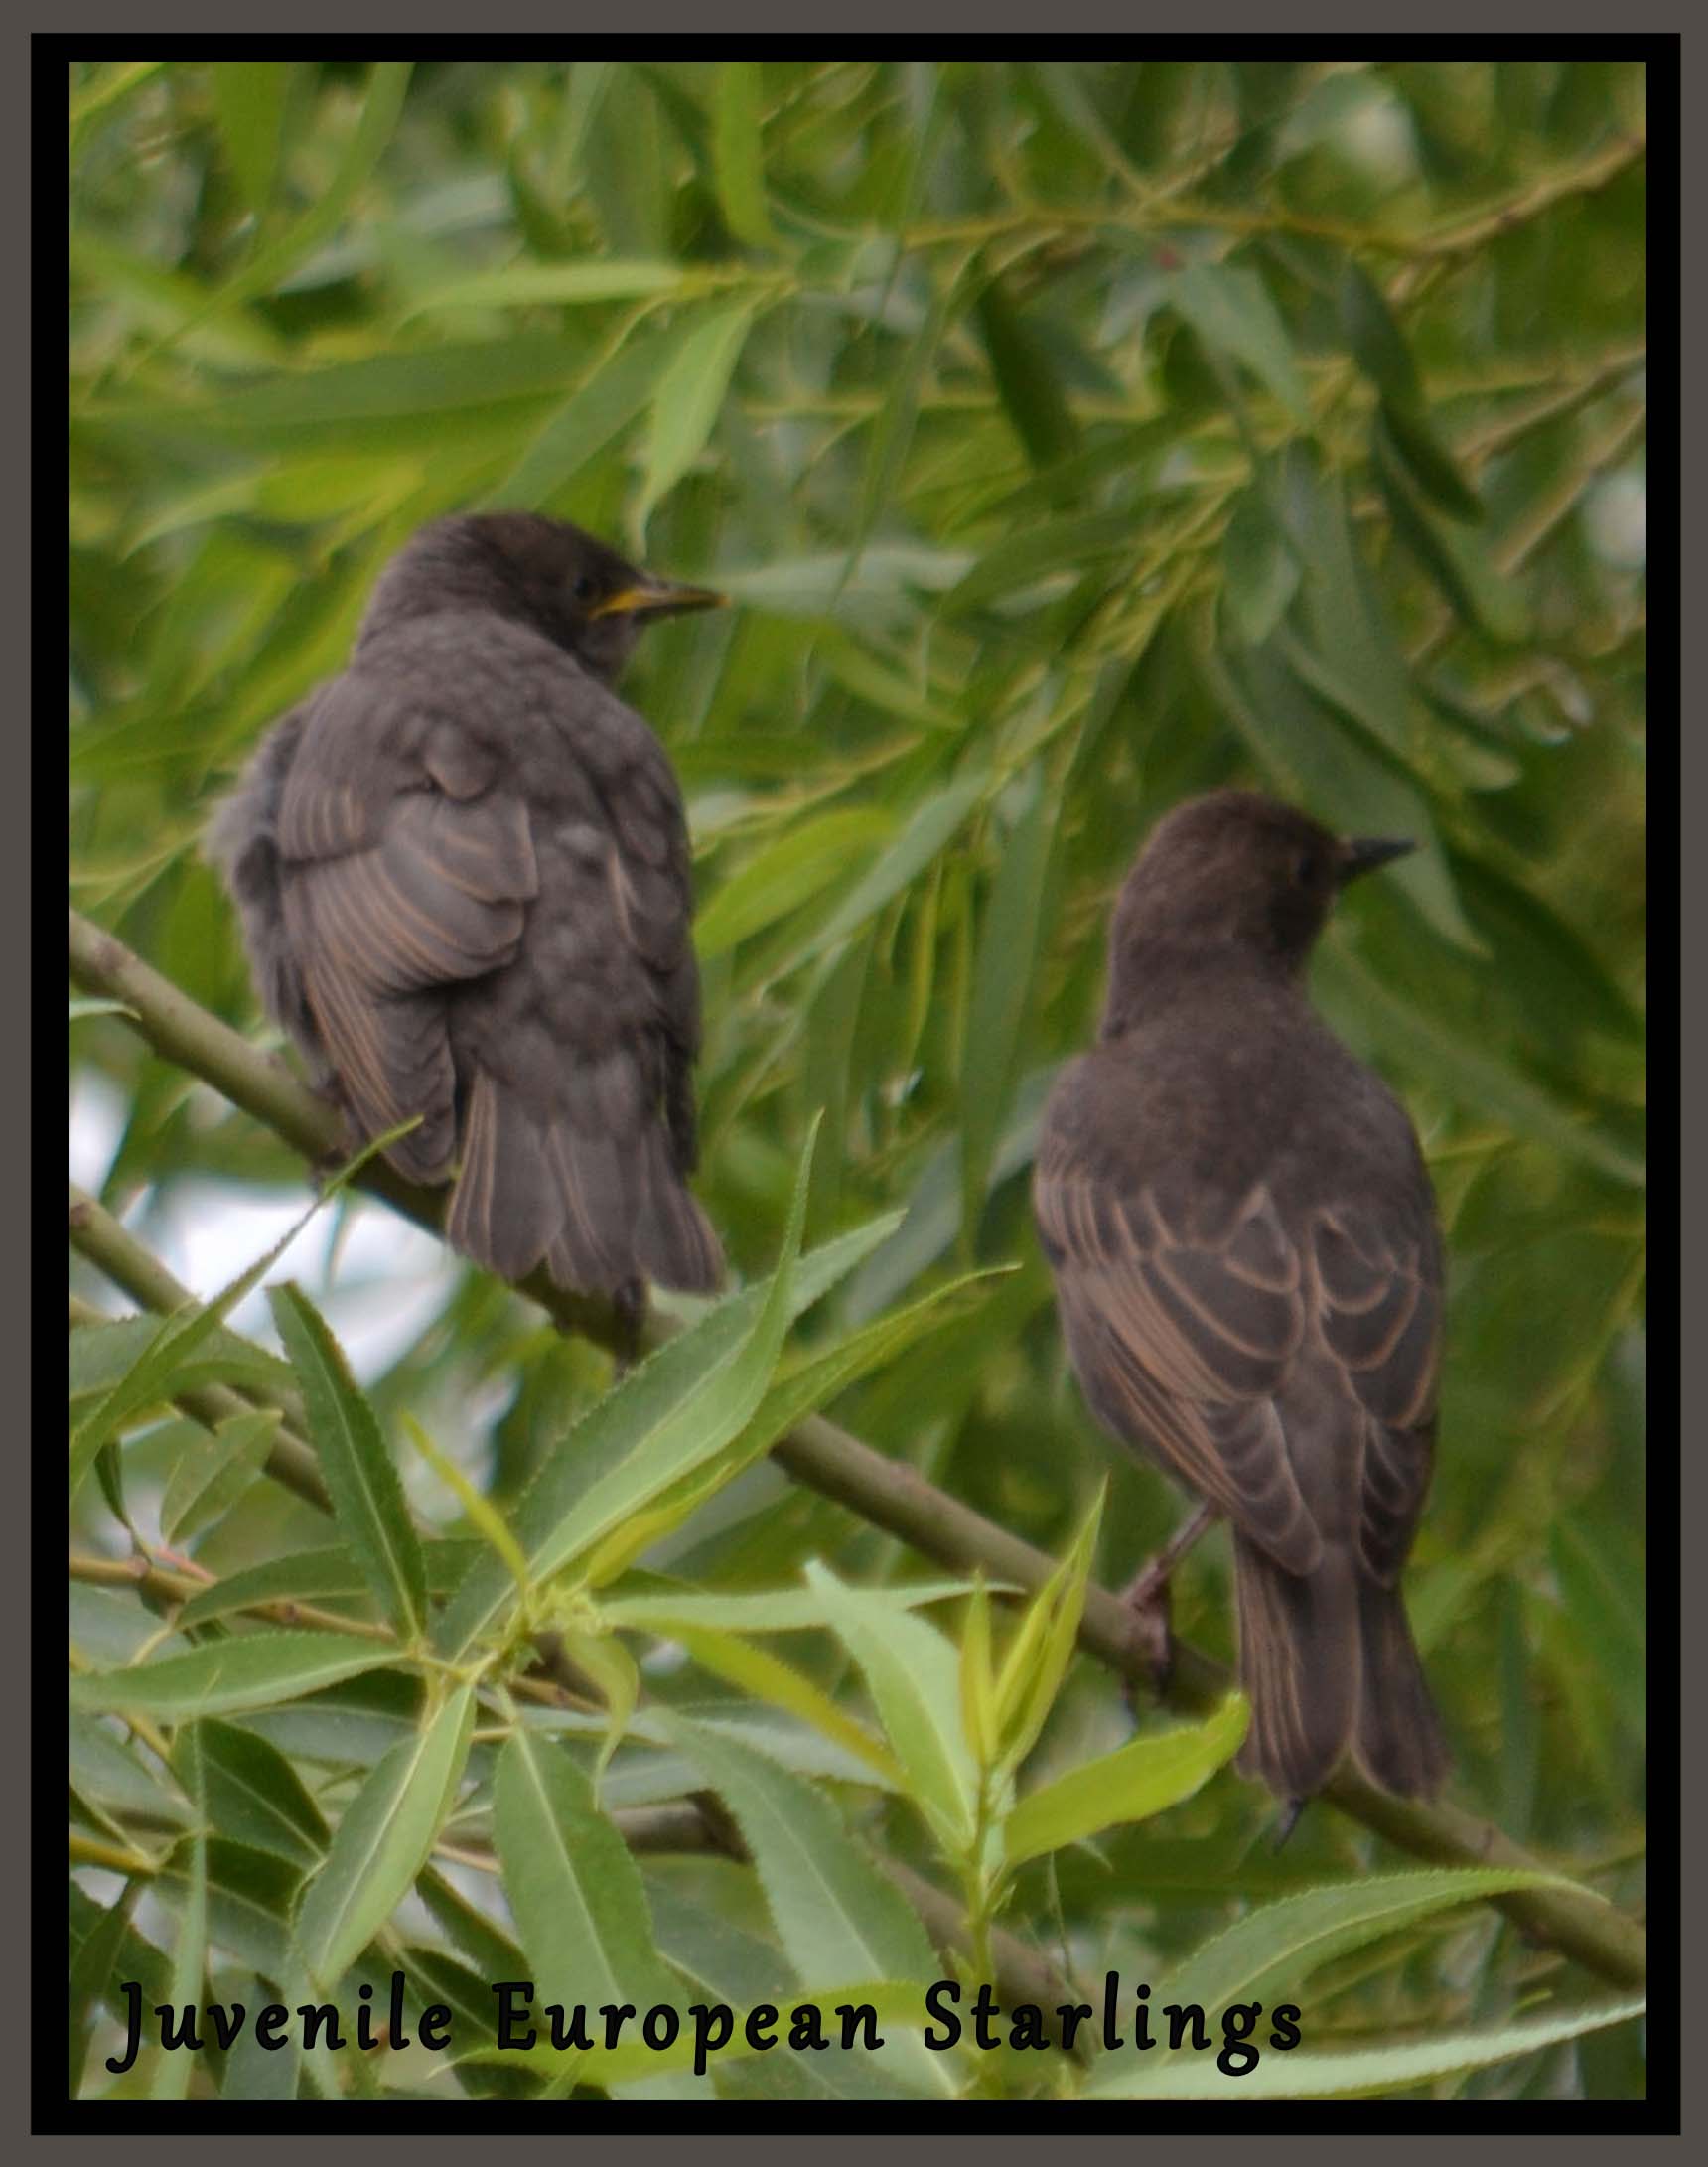 Juvenile European Starlings